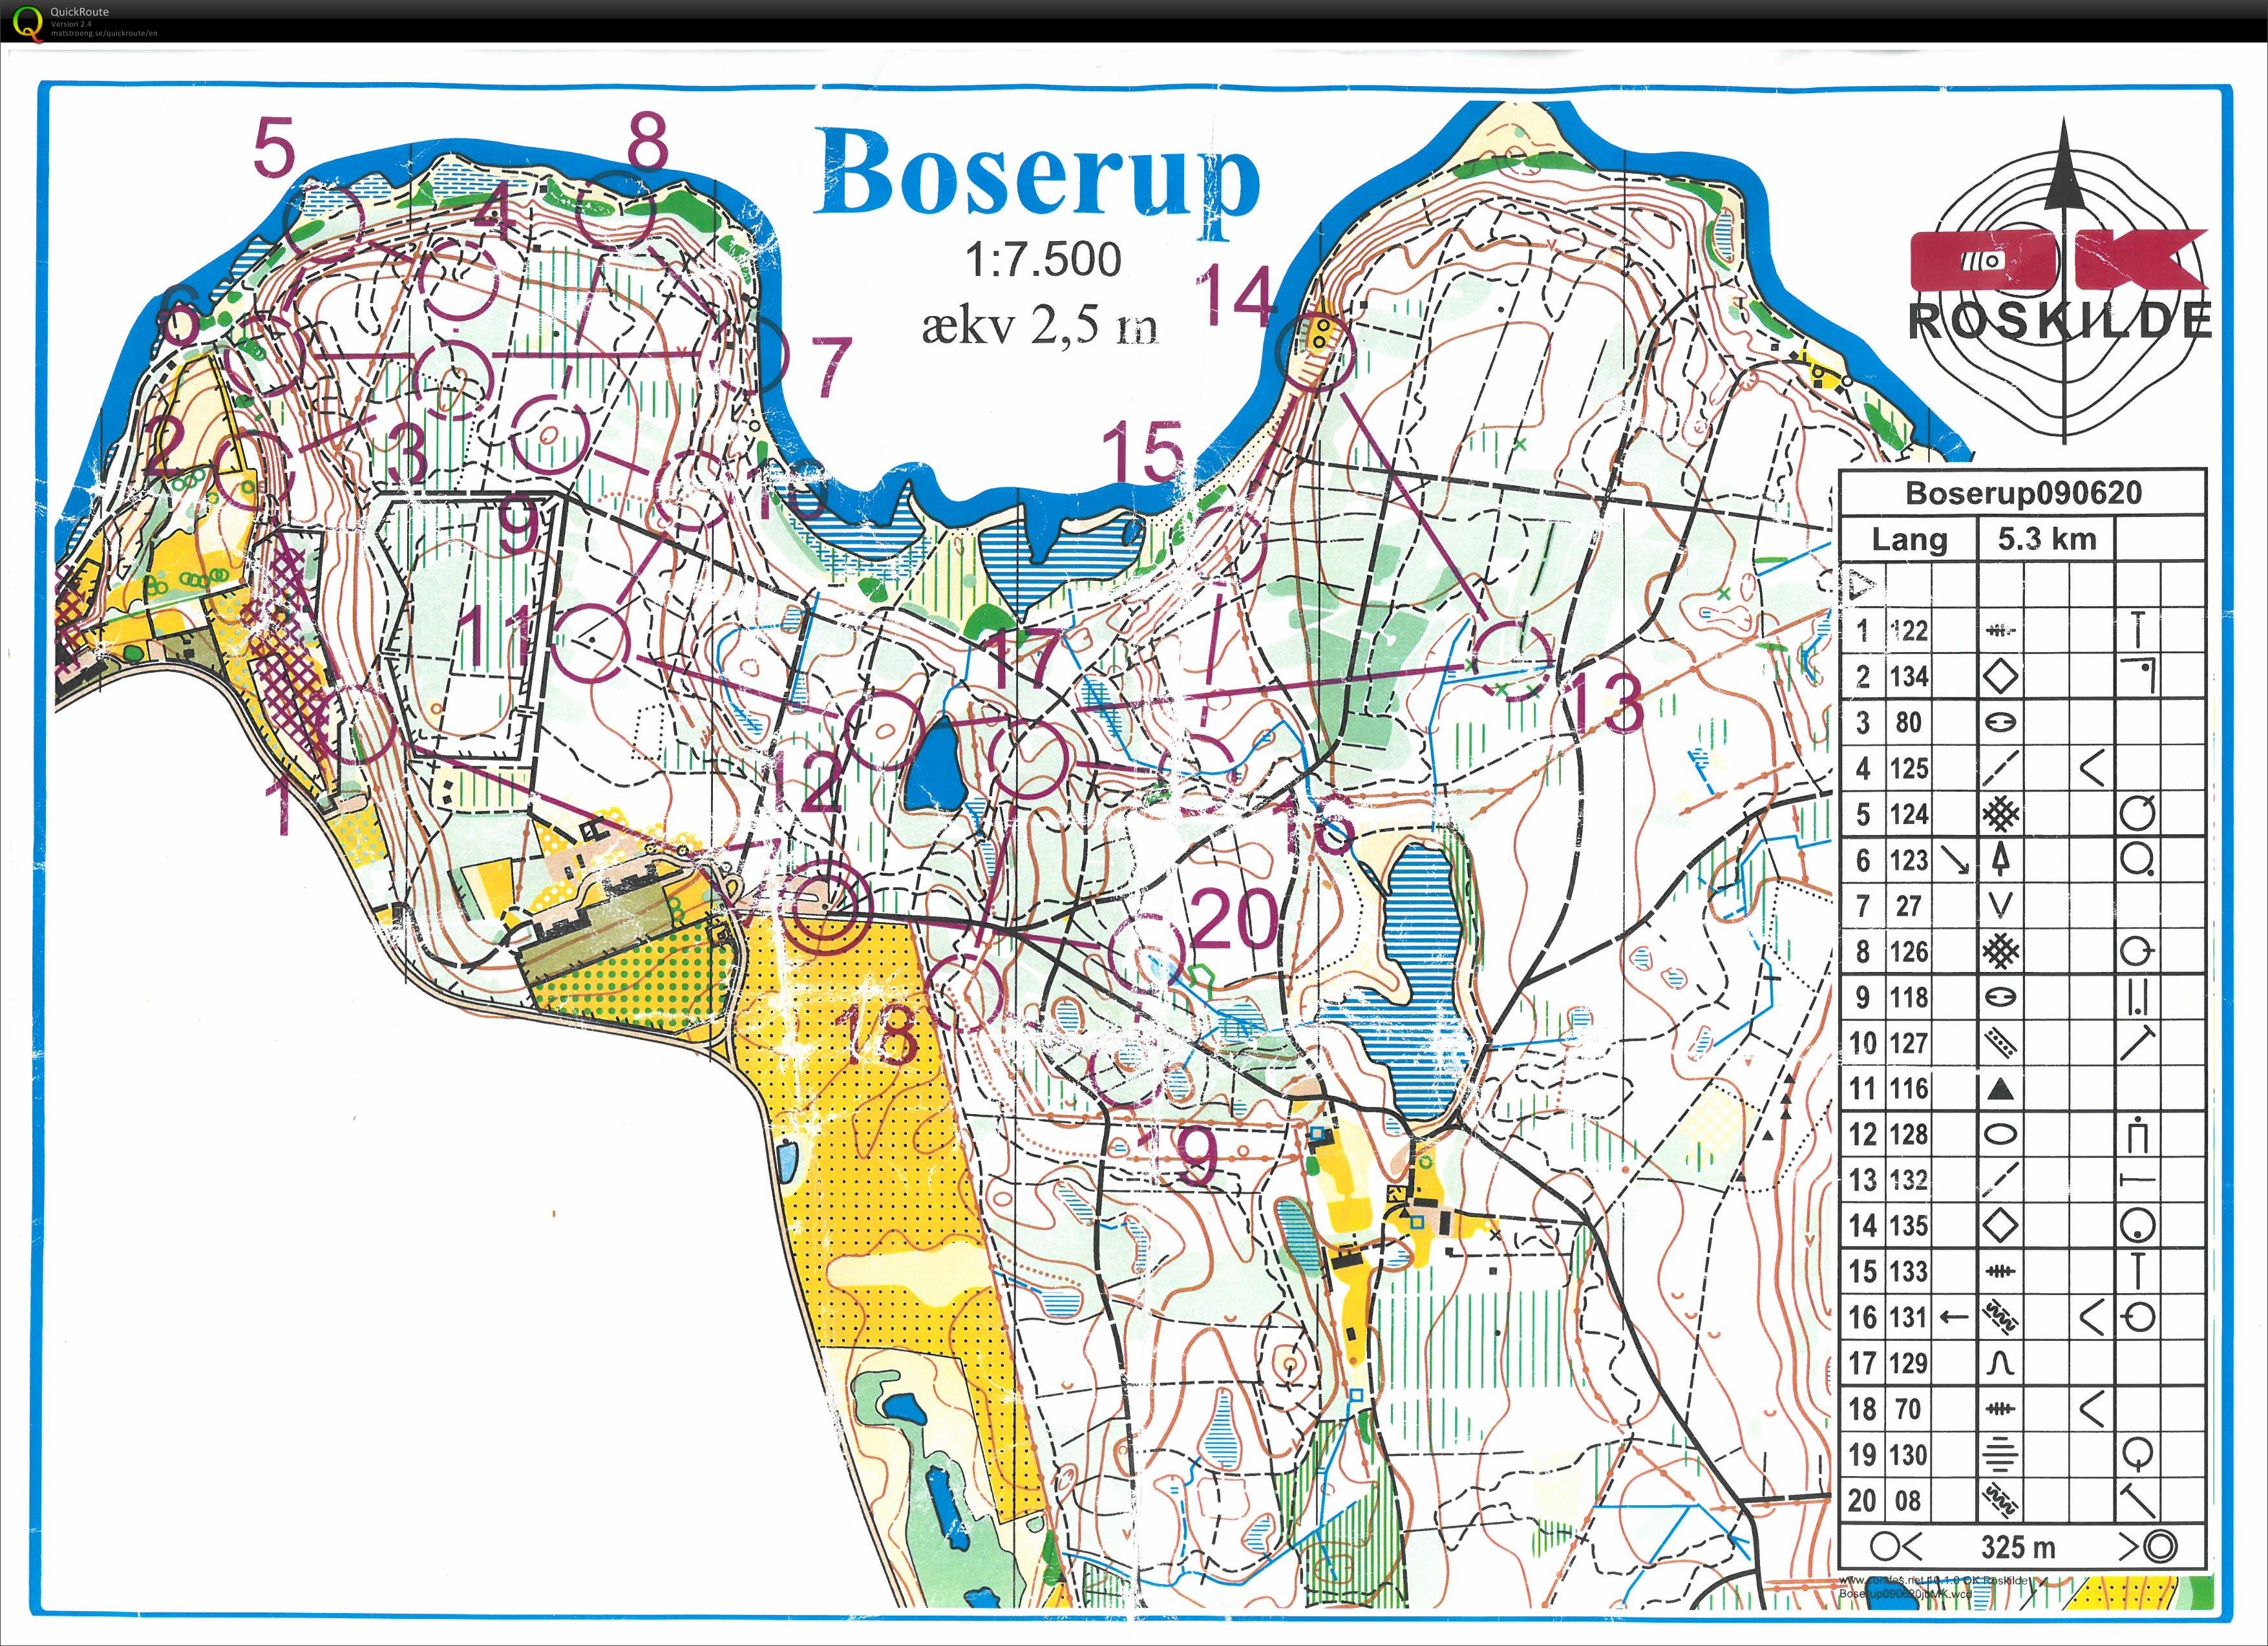 Tirsdagstræning i Boserup (09.06.2020)